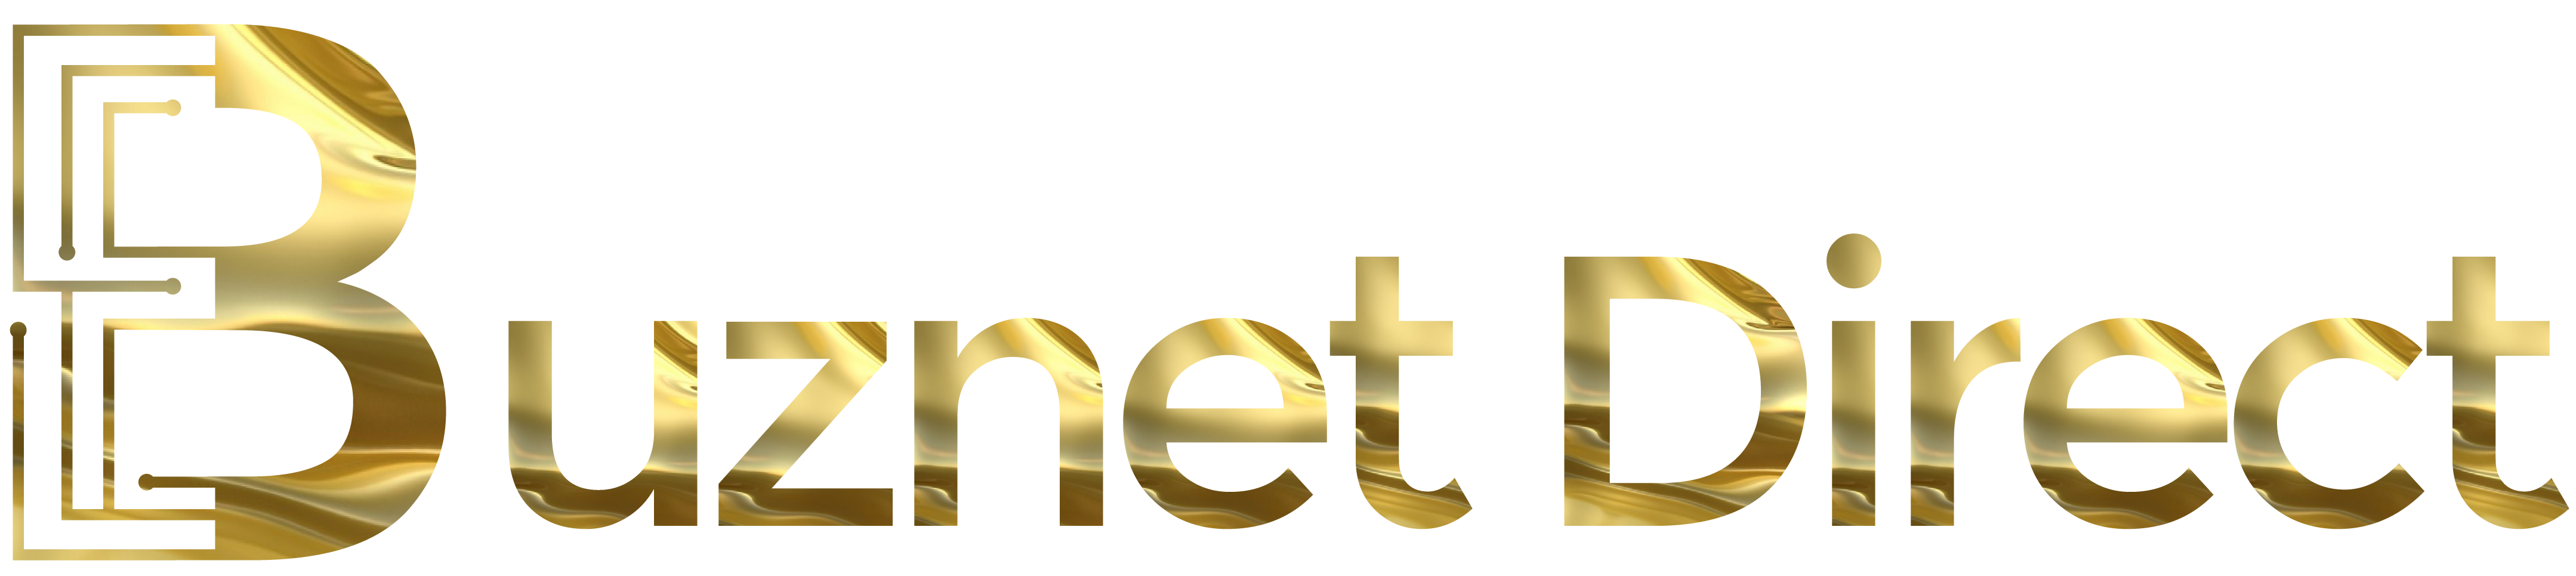 Buznet Direct Logo